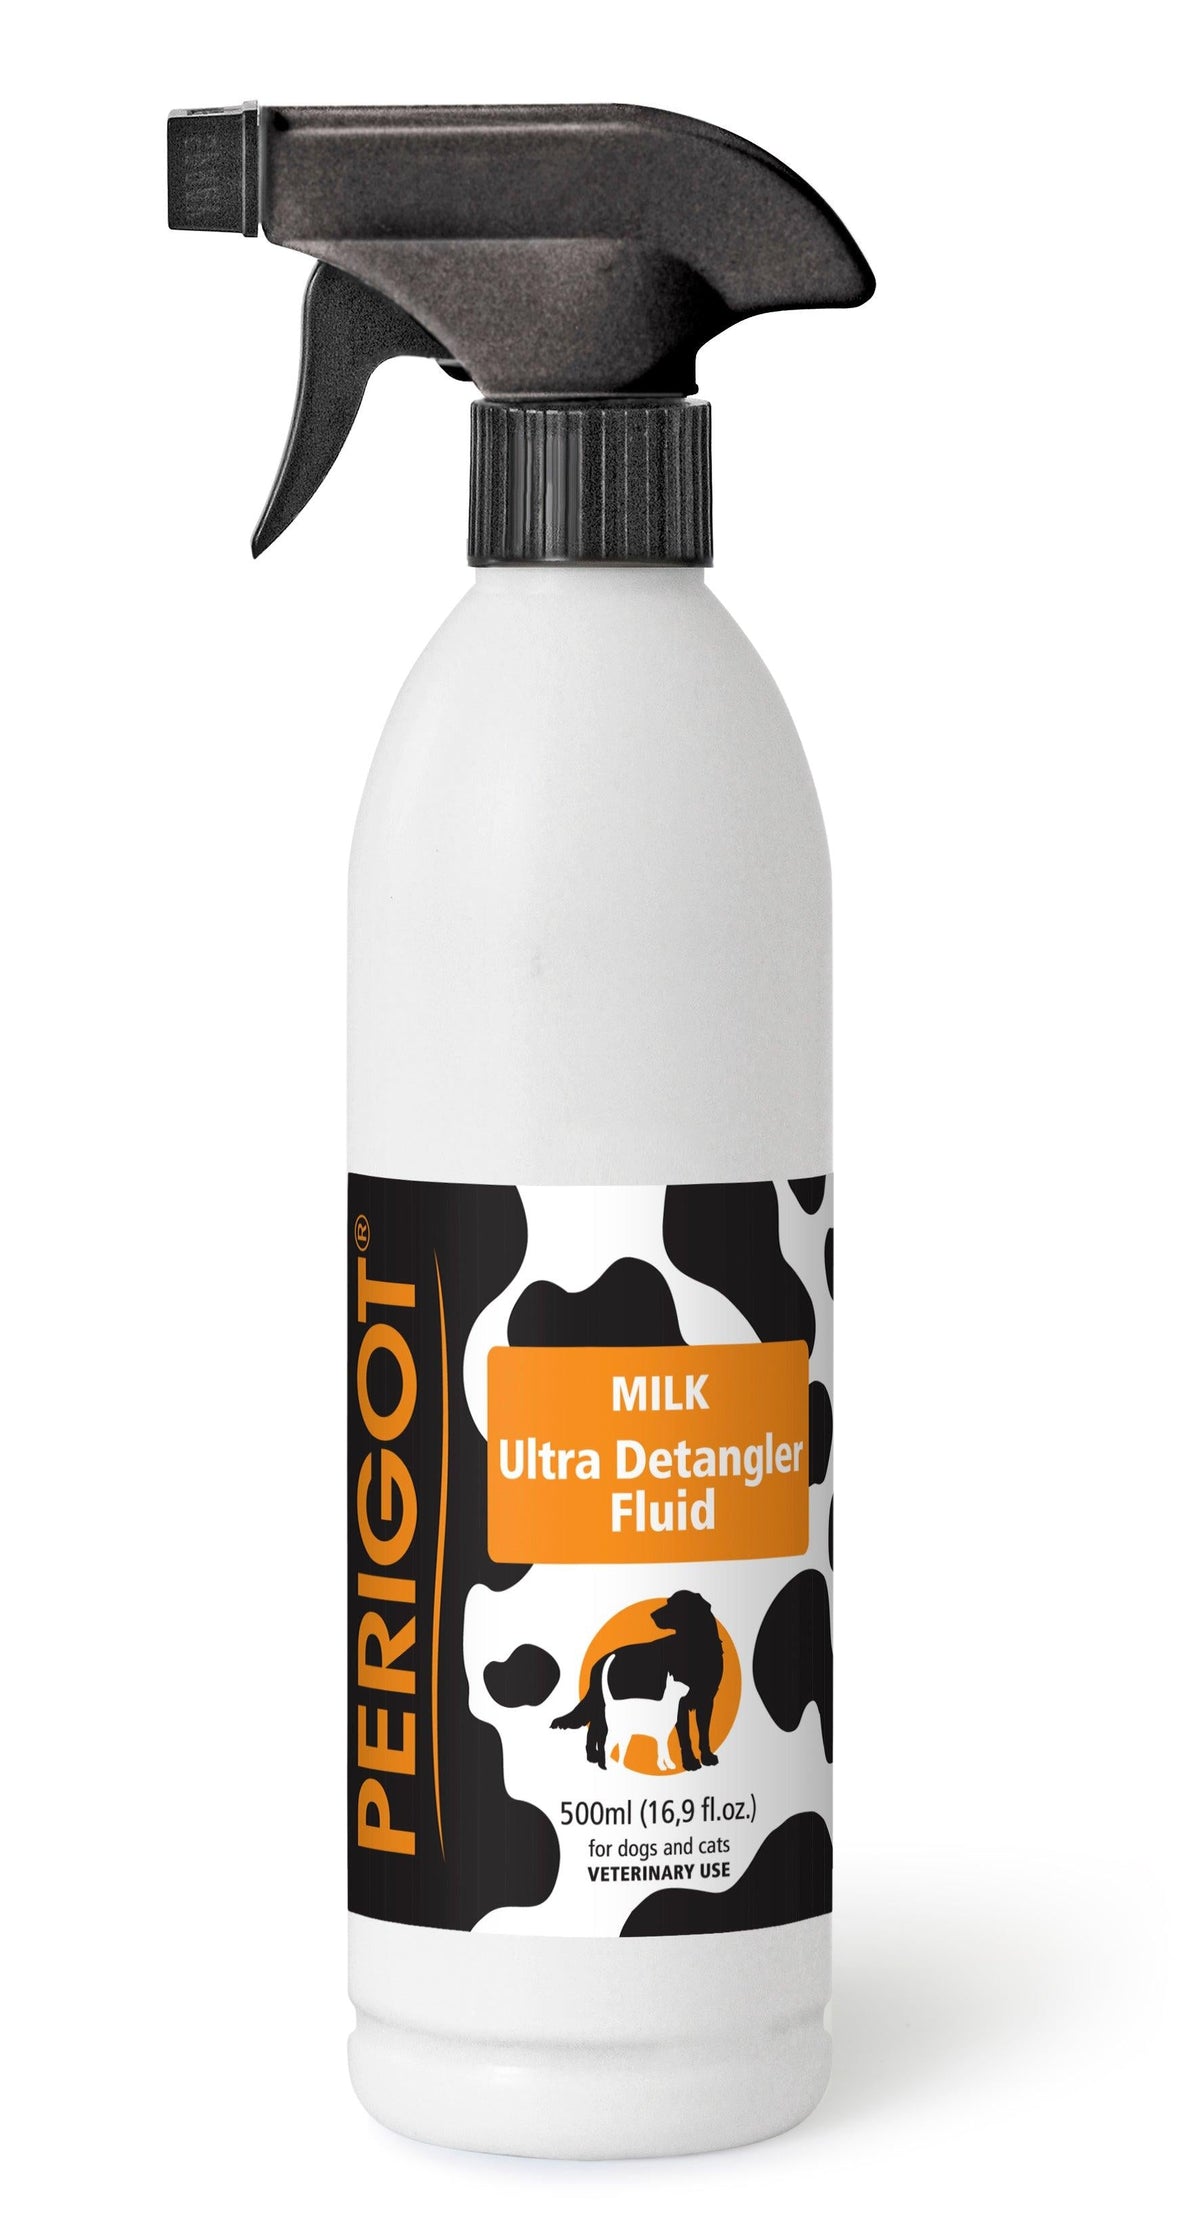 Perigot - Ultra-Detangler Fluid for Dogs 500 ml (16.9 fl.oz.) | Cats & Dogs